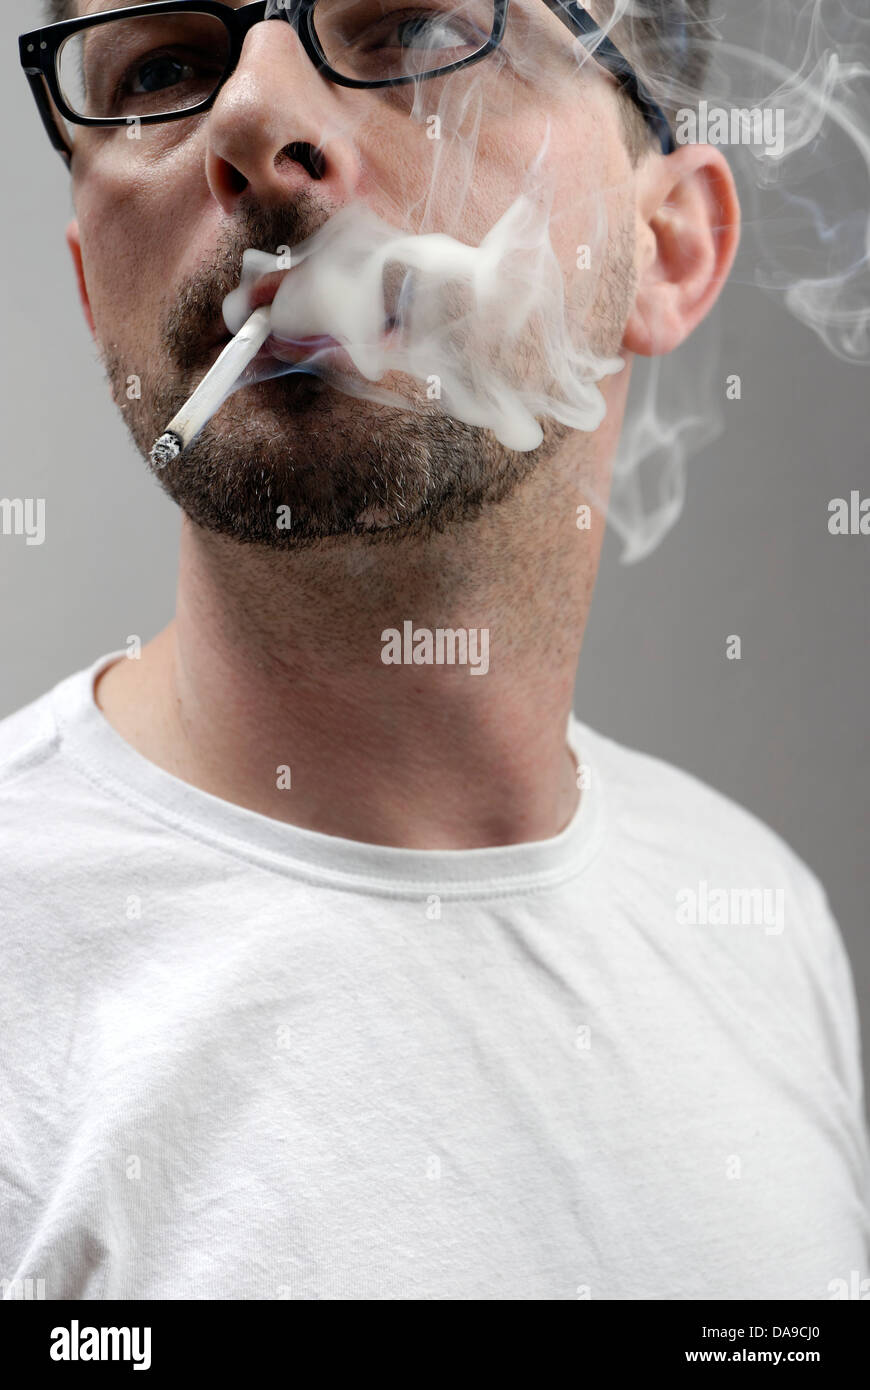 Man smoking a cigarette Stock Photo